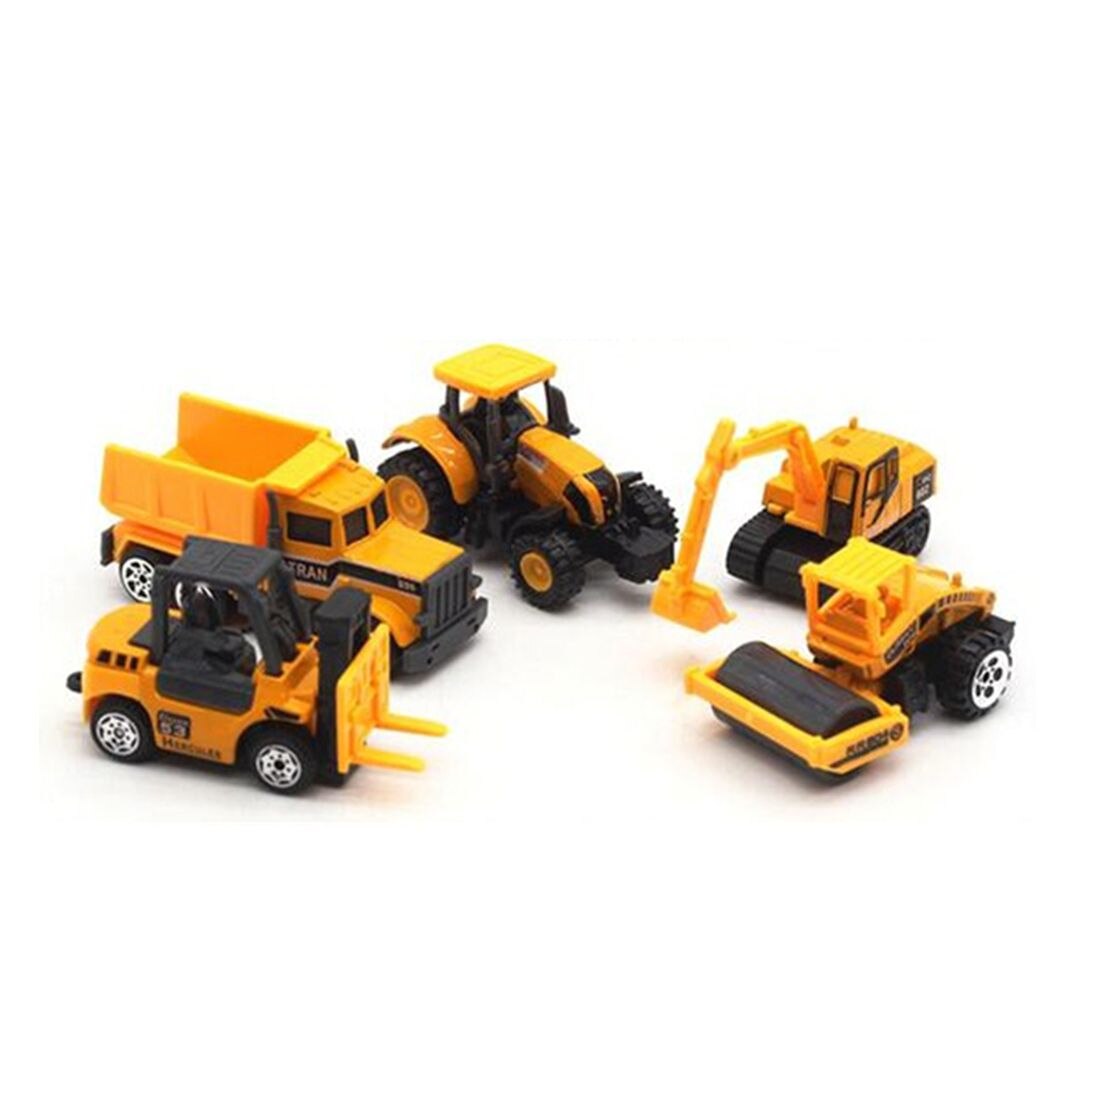 5 piece set truck model Hot 1:64 alloy car children's educational toy car Christmas birthday gift